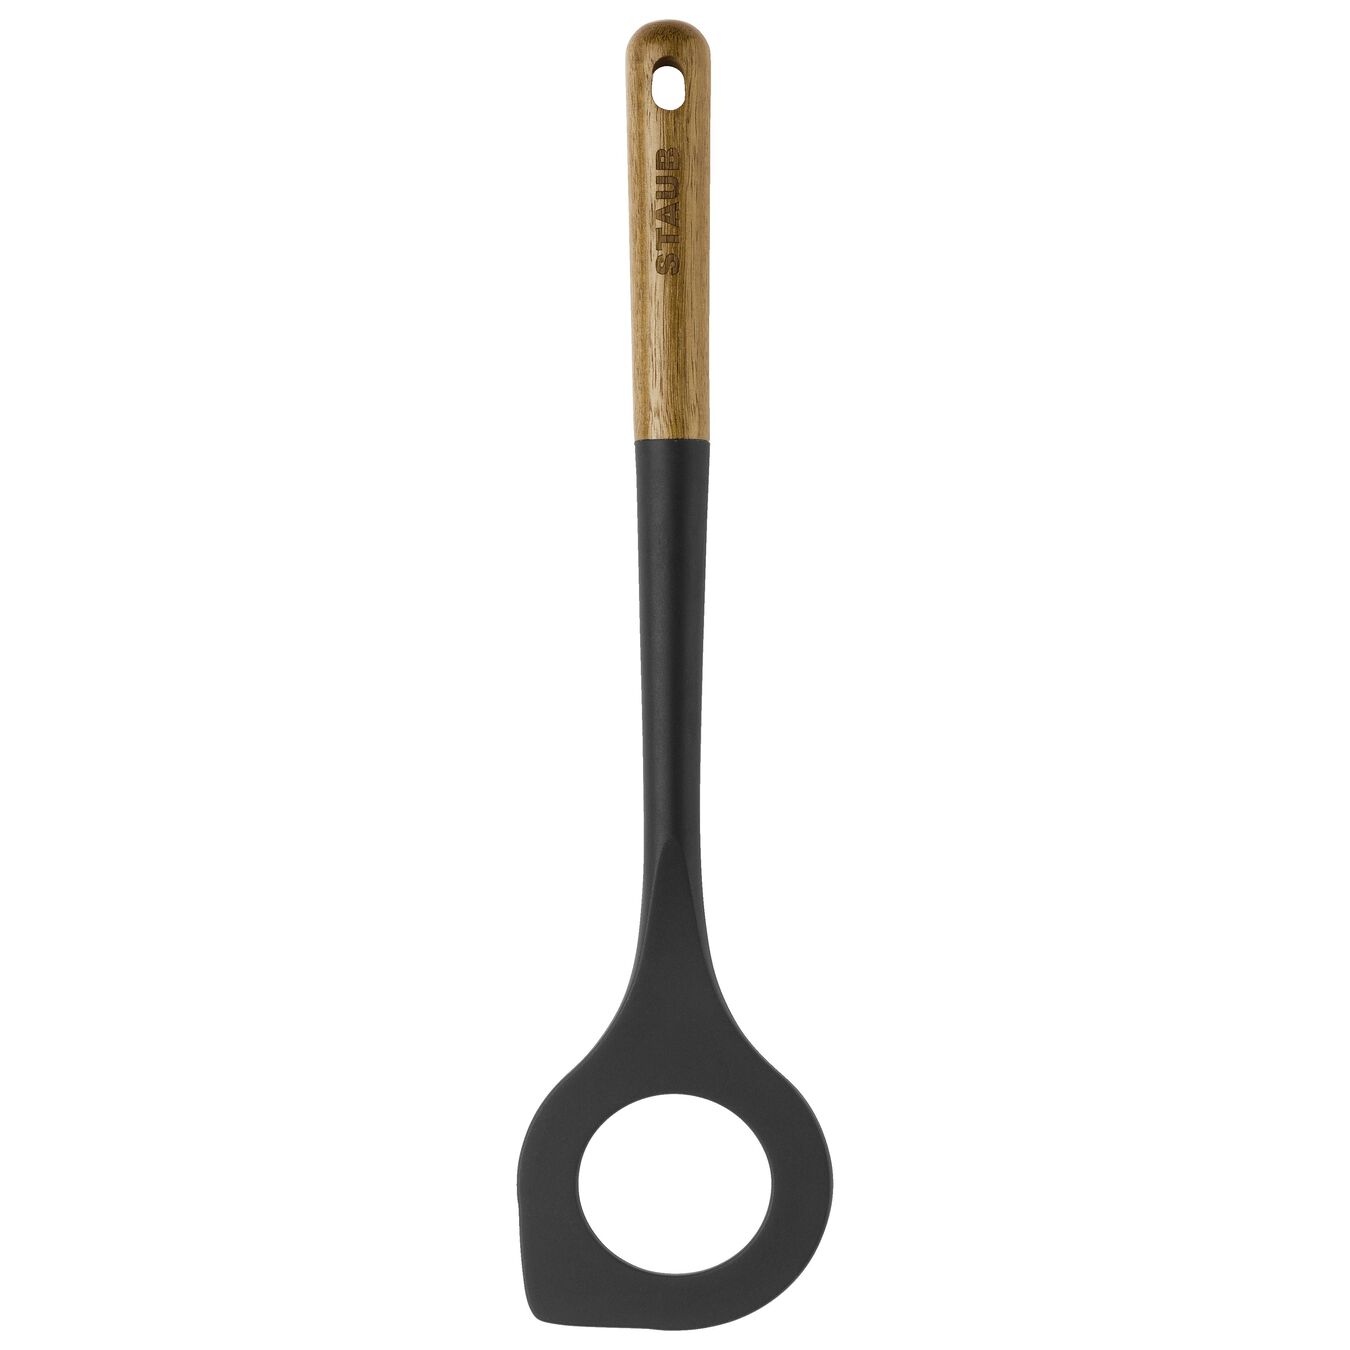 31 cm silicone Risotto spoon, black,,large 2